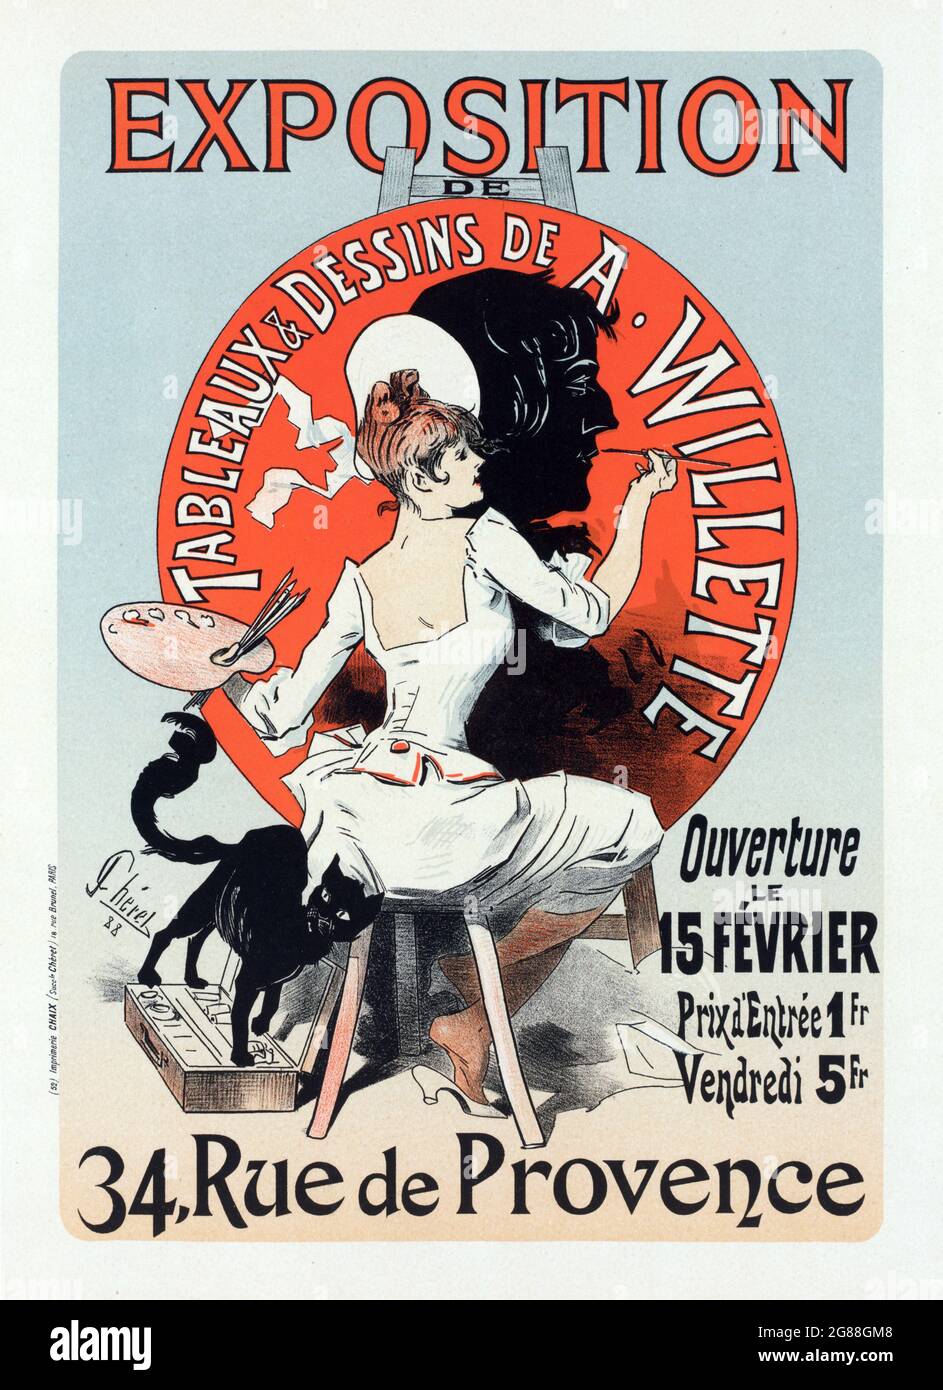 Exposition Tableaux & Dessins de A. Willette – La belle époque poster. 1888. Digitally enhanced. Woman painting. French advertising. Stock Photo